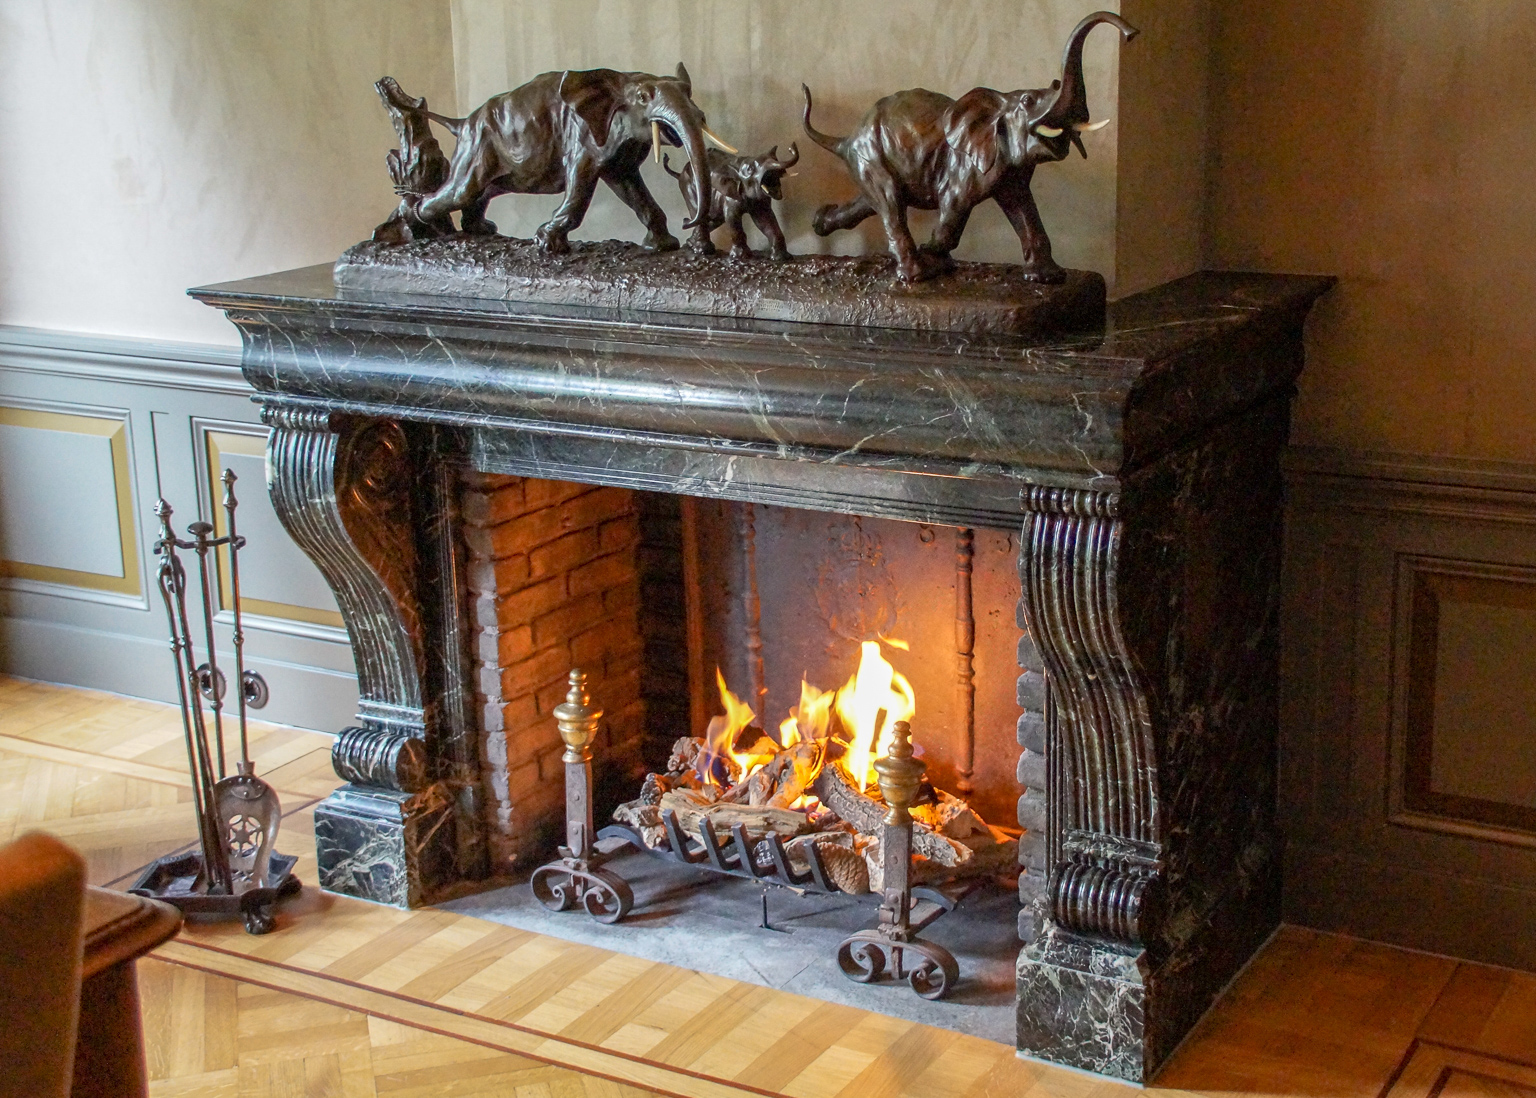 Fireback in fireplace with rectangular floor